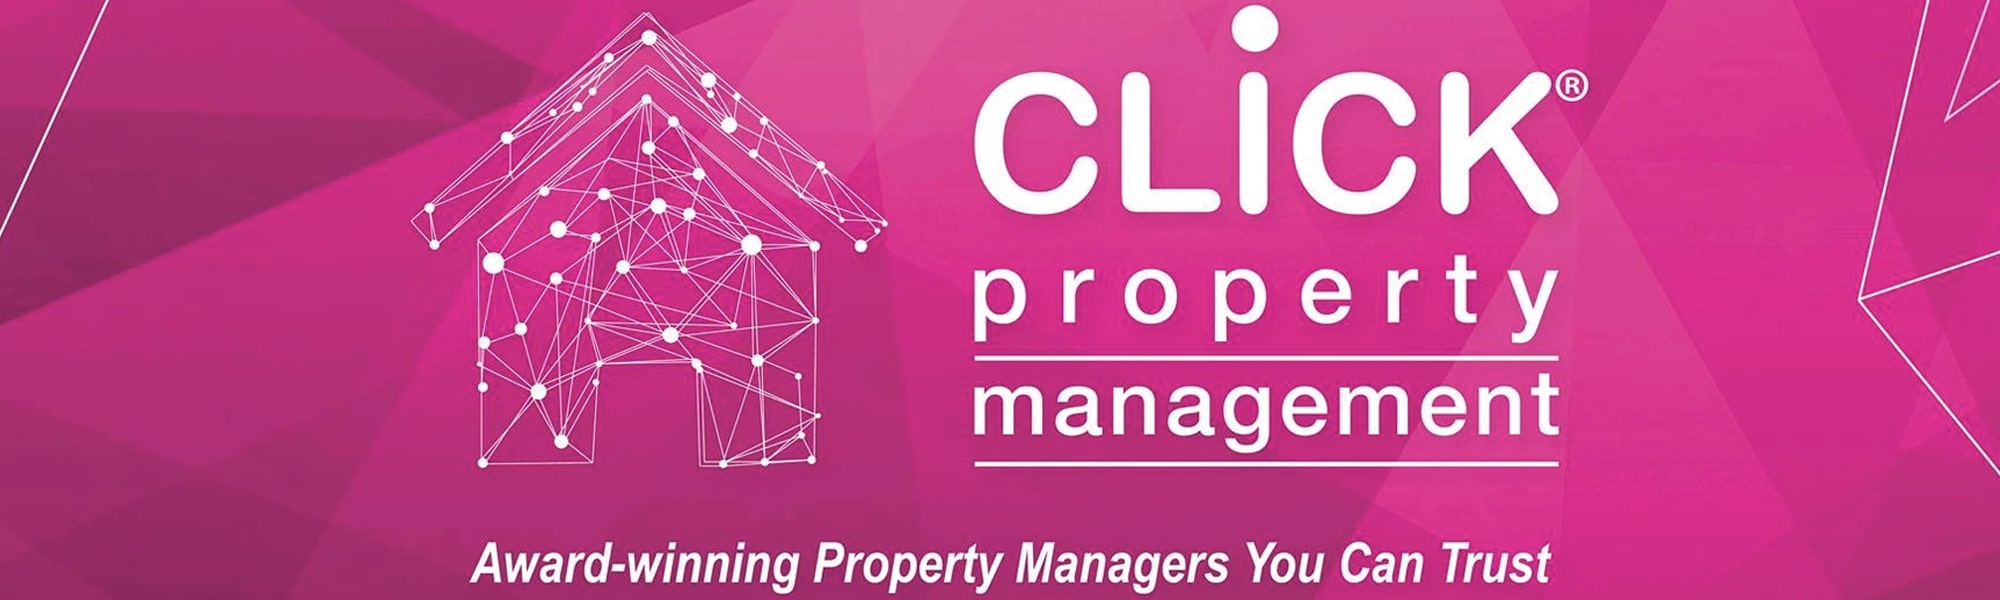 click-property-management